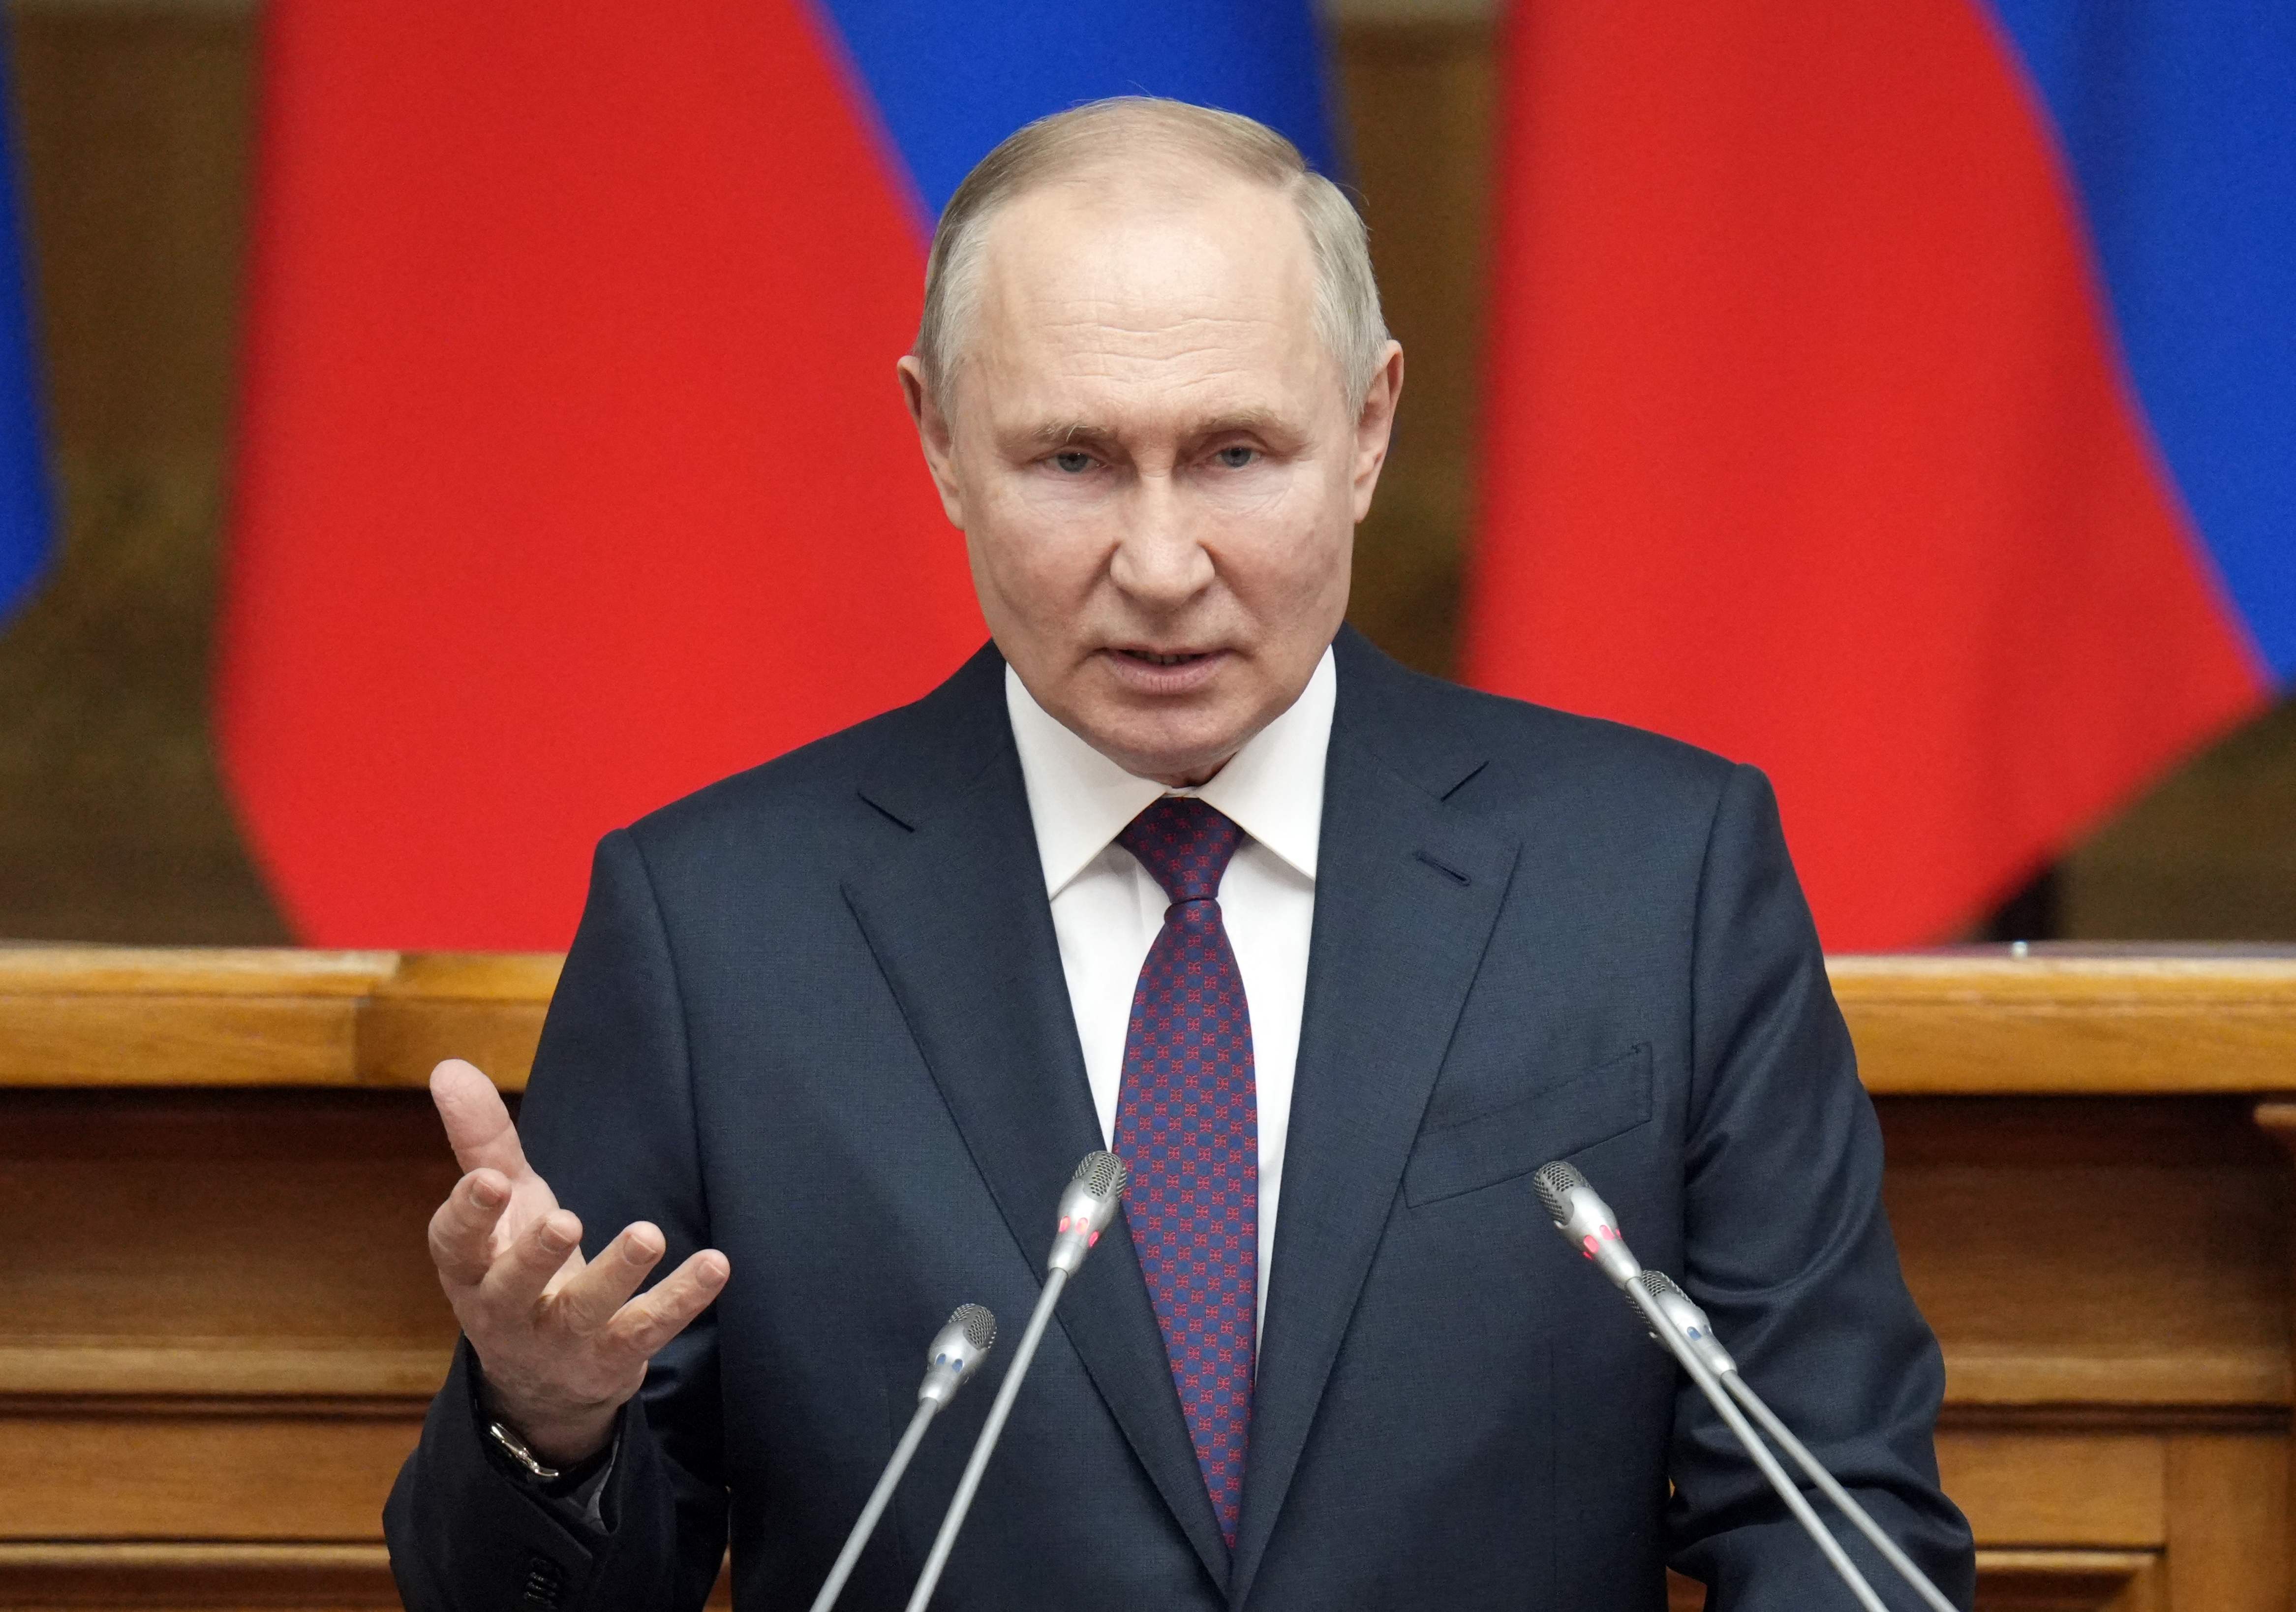 Putin has slowly turned into a Bond villain caricature of himself